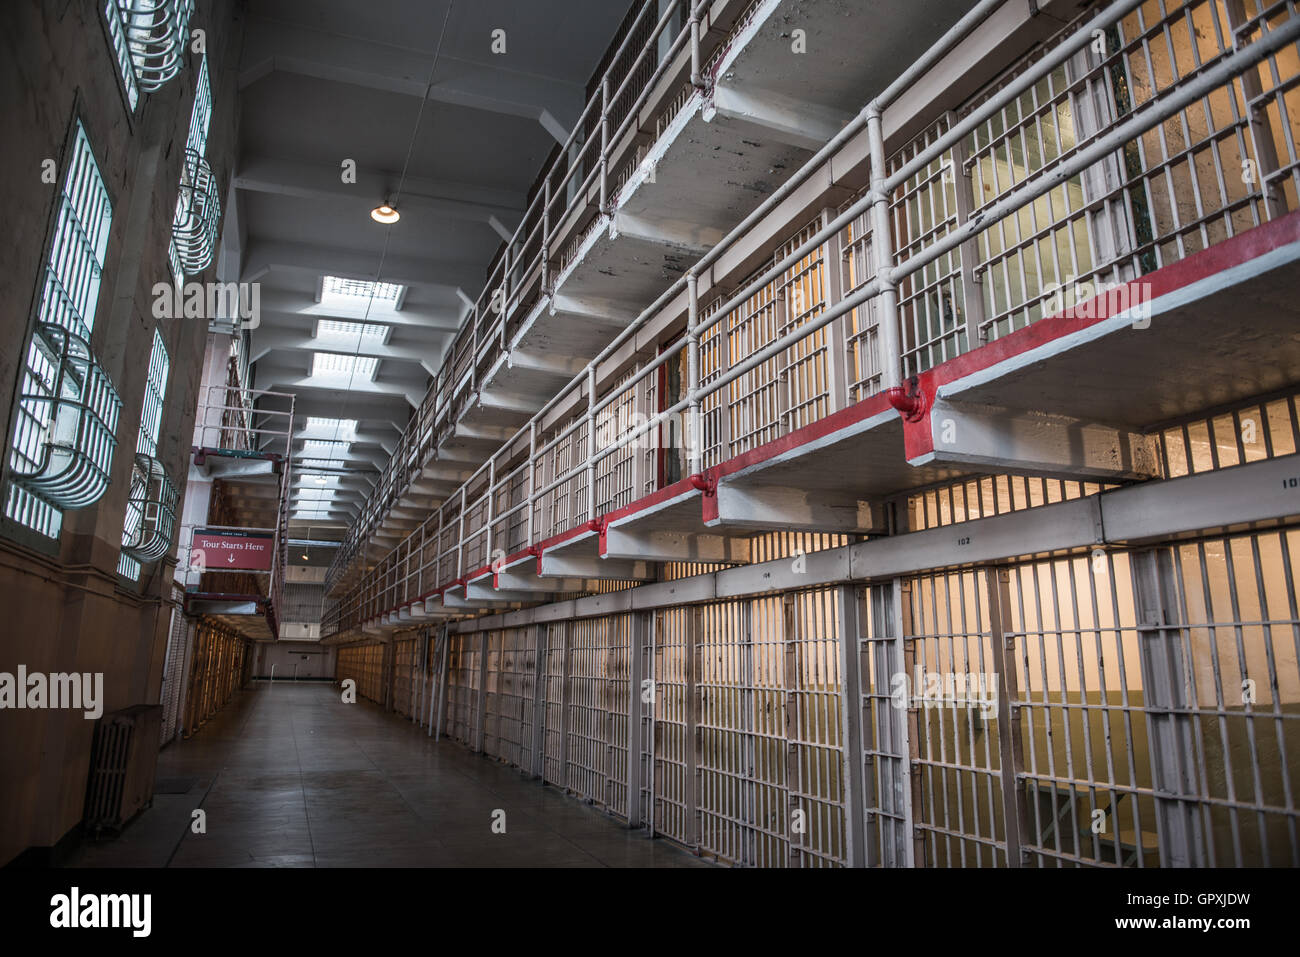 Prison Corridor inside the Alcatraz Penitentiary, with the row of rooms Stock Photo